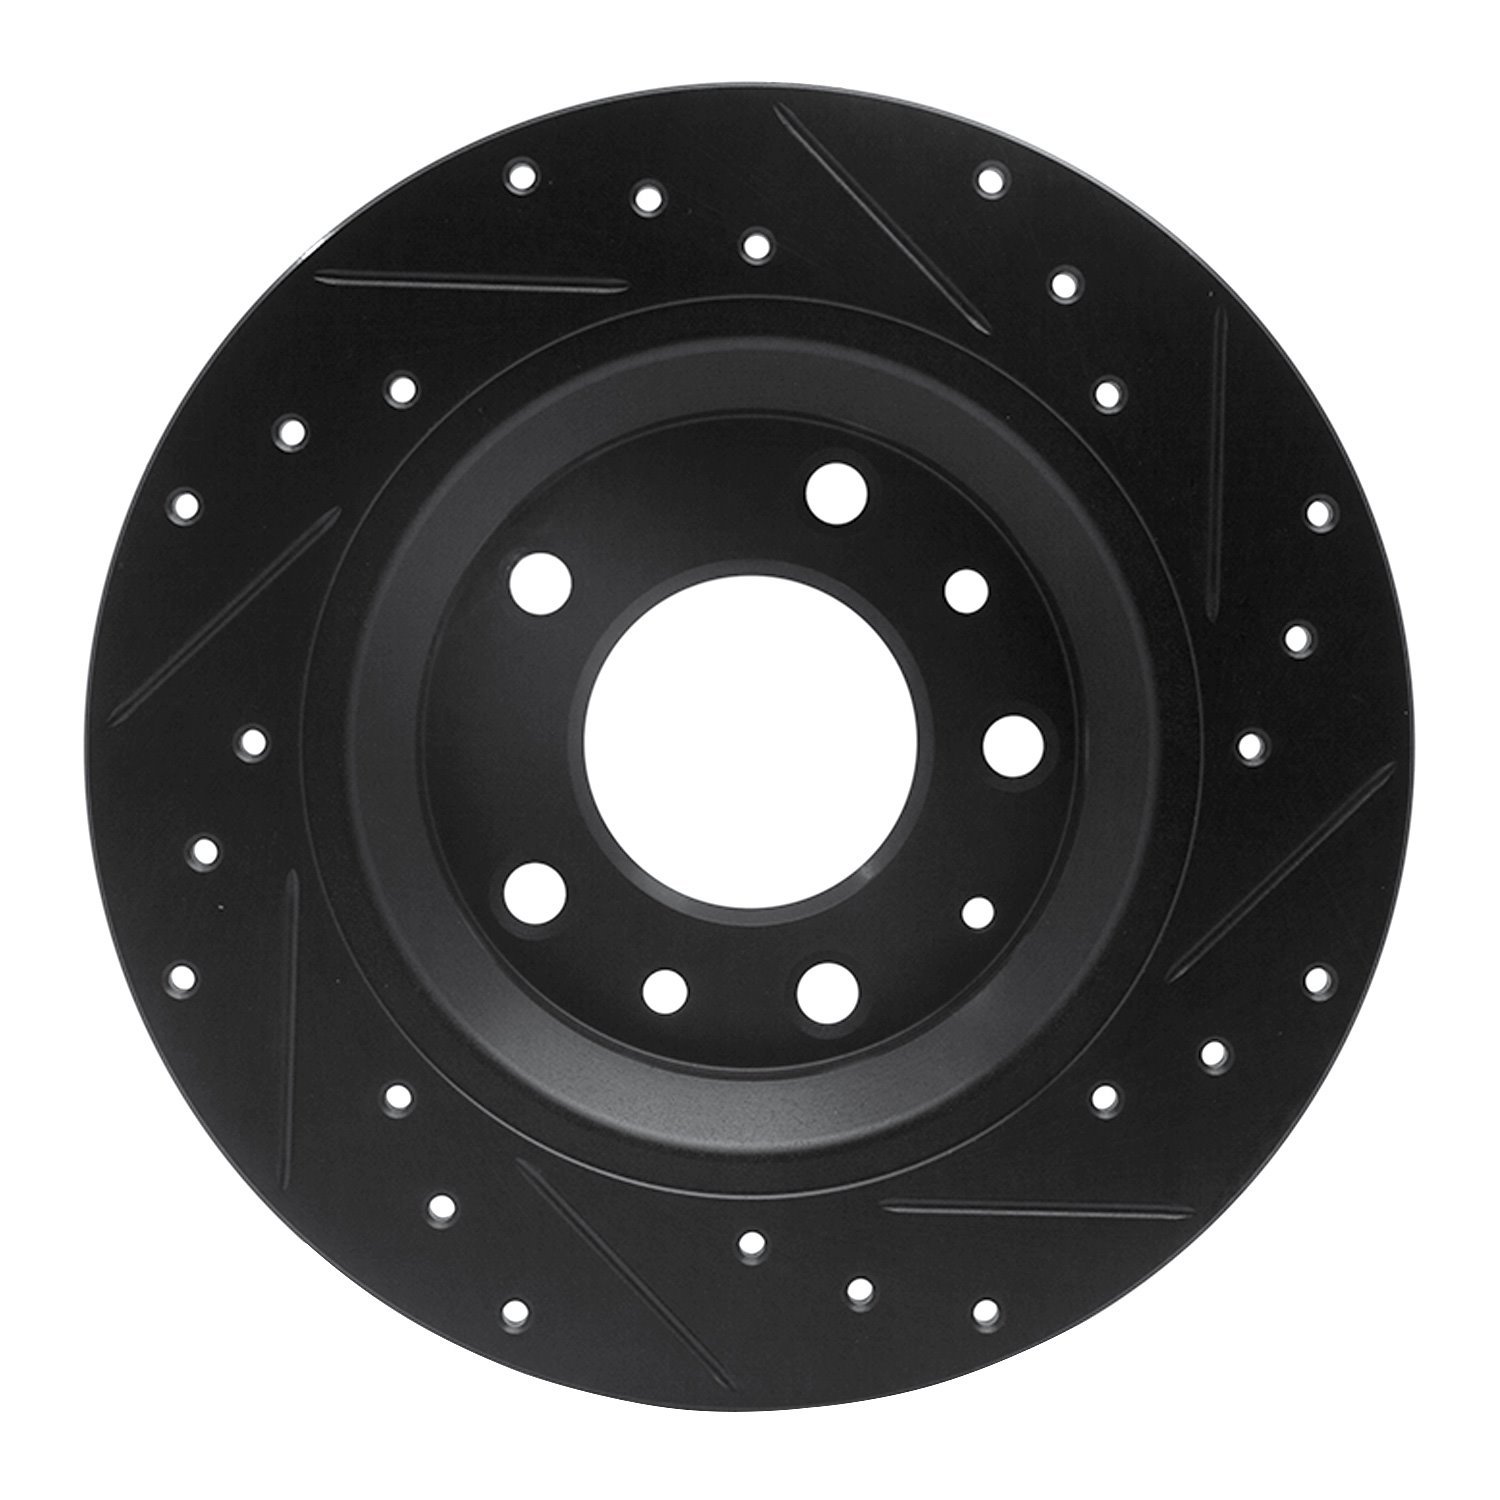 E-Line Drilled & Slotted Black Brake Rotor, 1998-2015